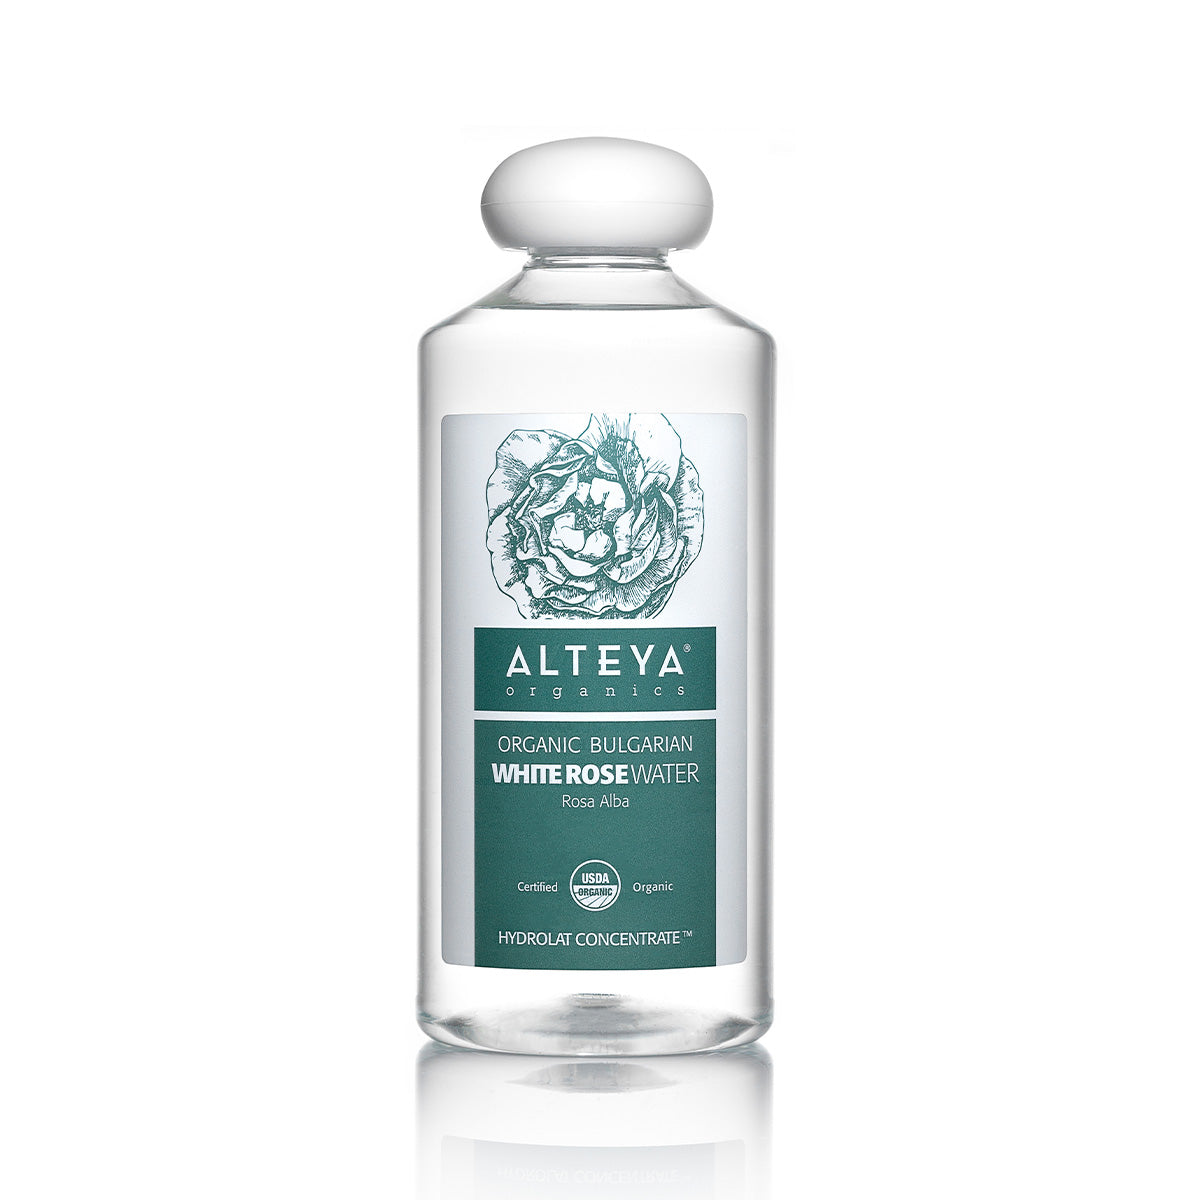 An Alteya Organics organic bottle of Organic Bulgarian White Rose Water (Rosa Alba) - 17 Fl Oz-based toner for the skin.